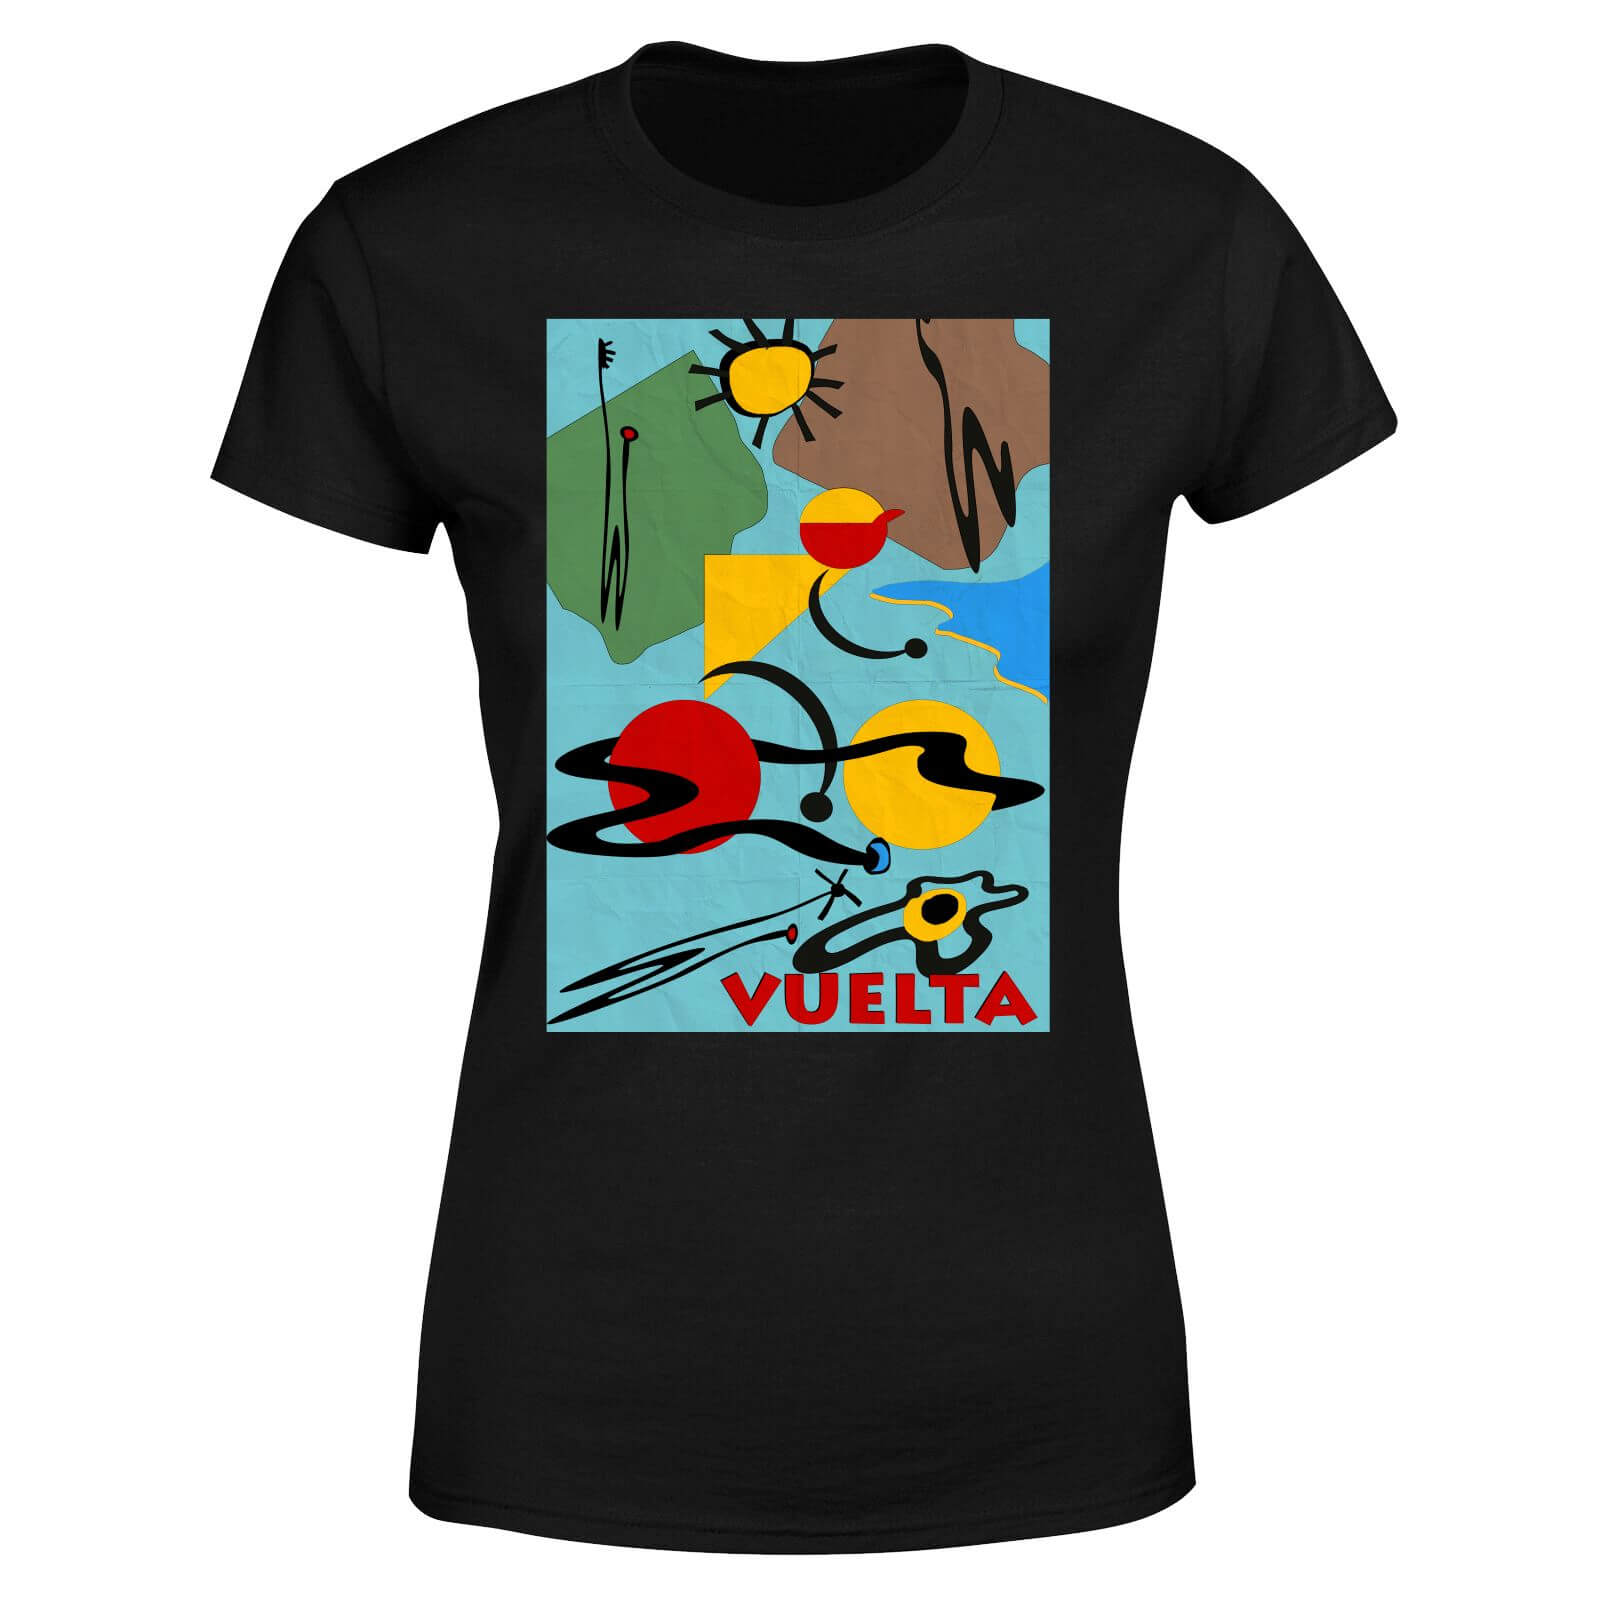 Vuelta Miro Women's T-Shirt - Black - XS